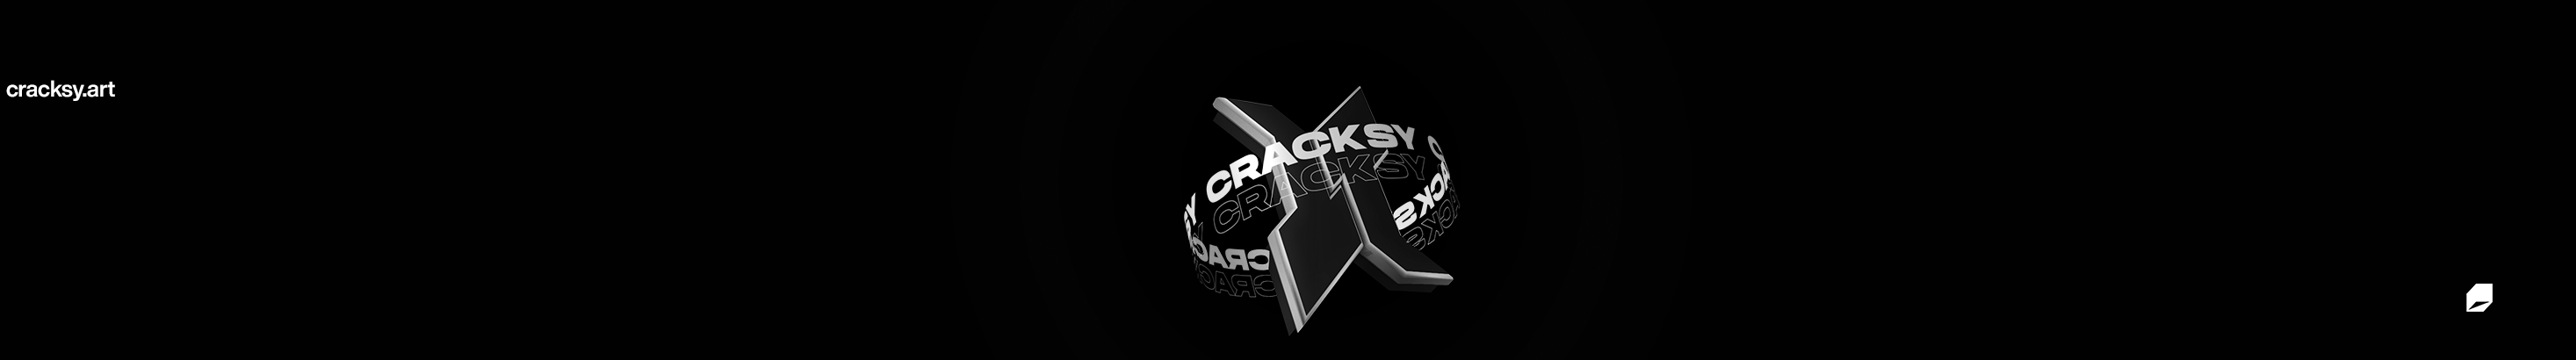 Cracksy Artz's profile banner